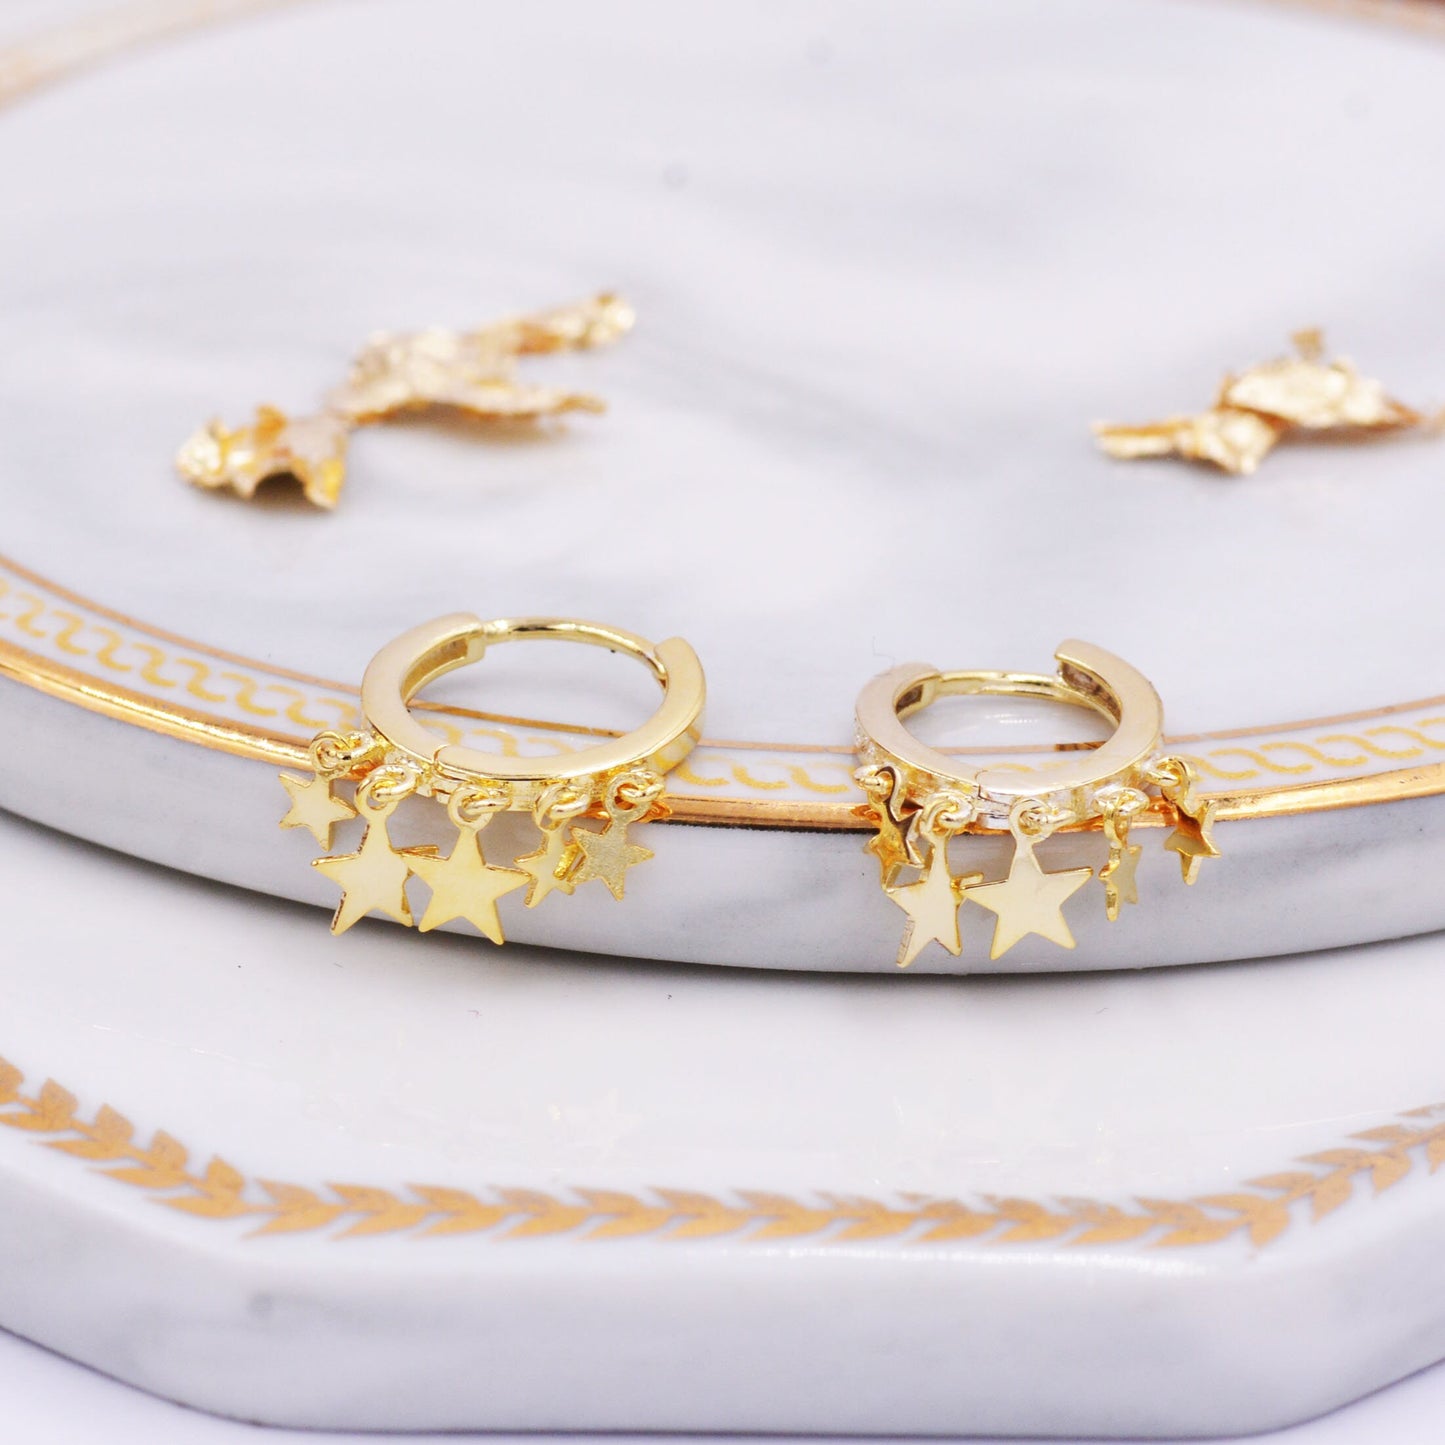 Huggie Hoop Earrings with Dangling Star Charms in Sterling Silver, Celestial Geometric Design